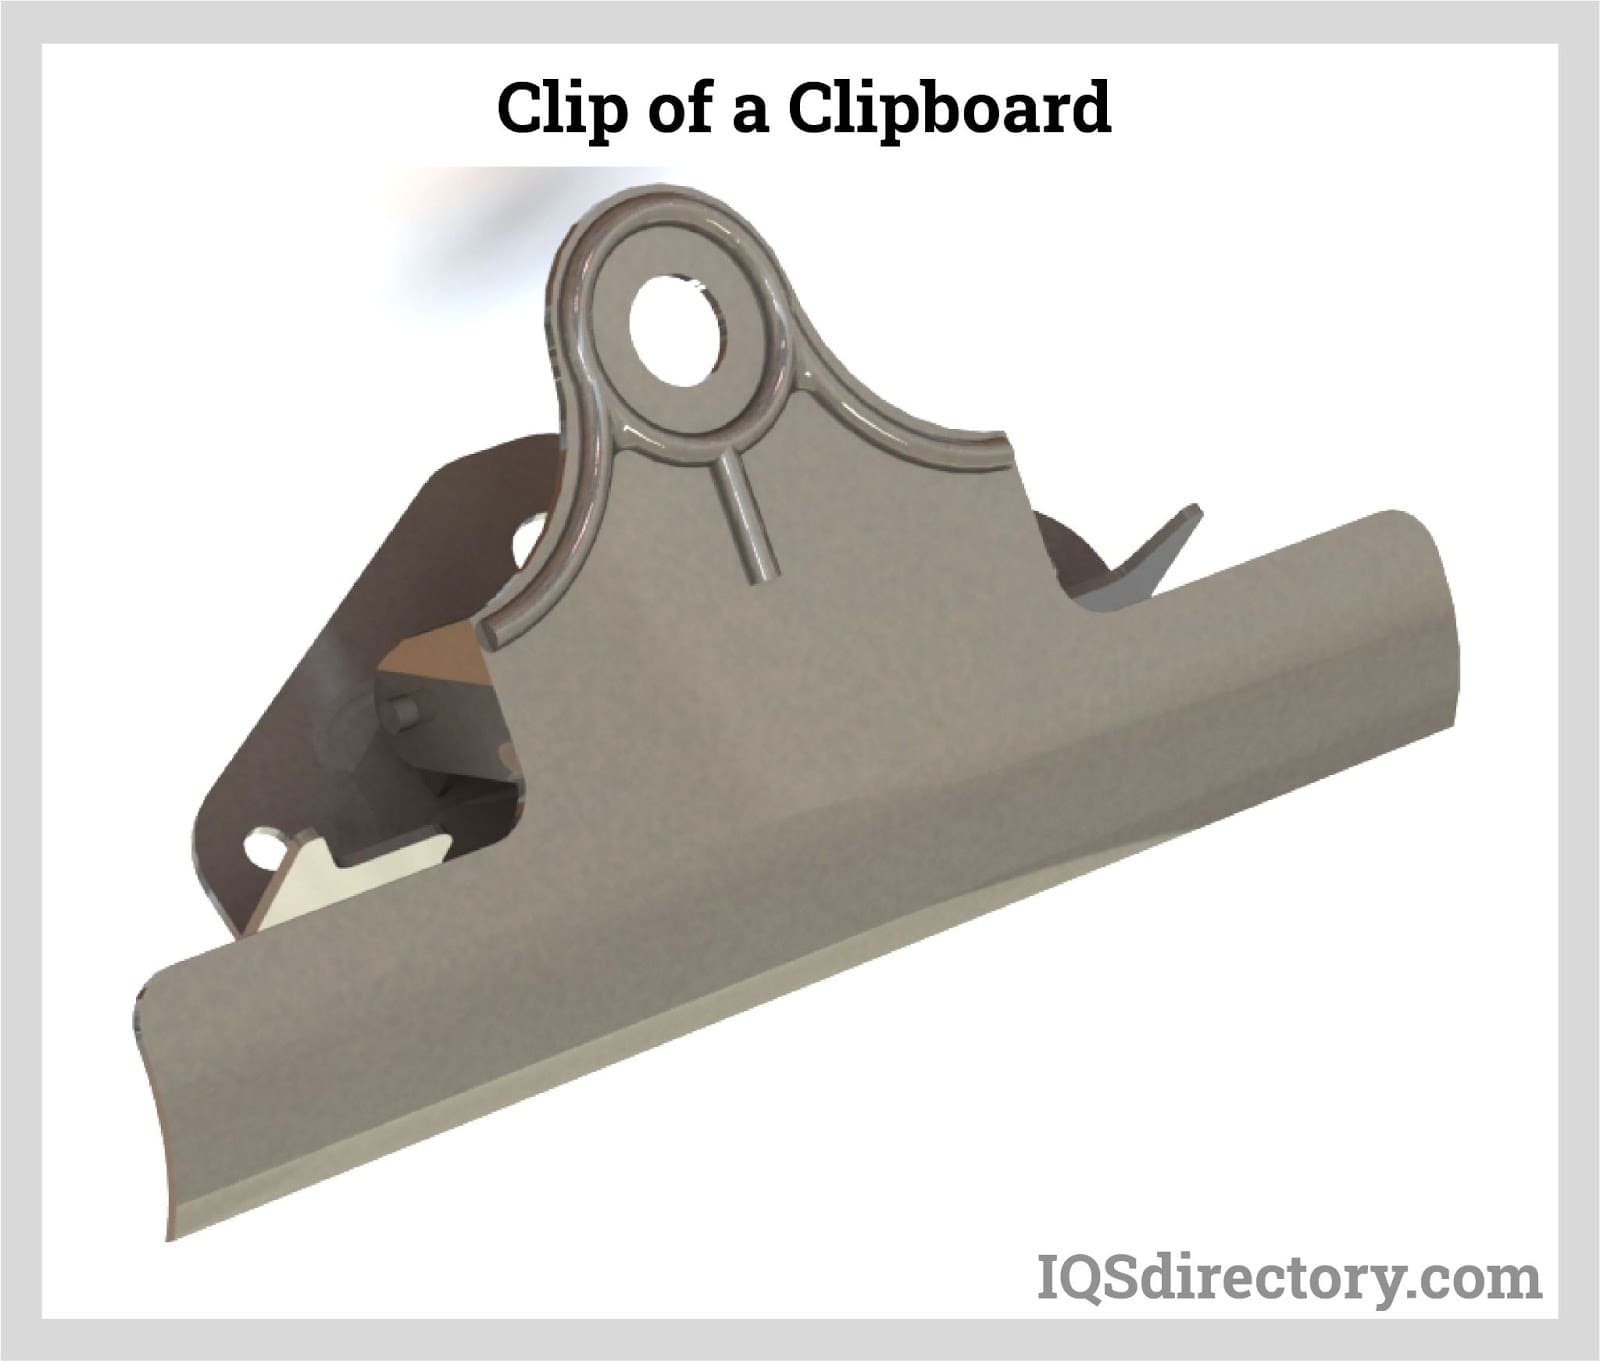 Clip of a Clipboard